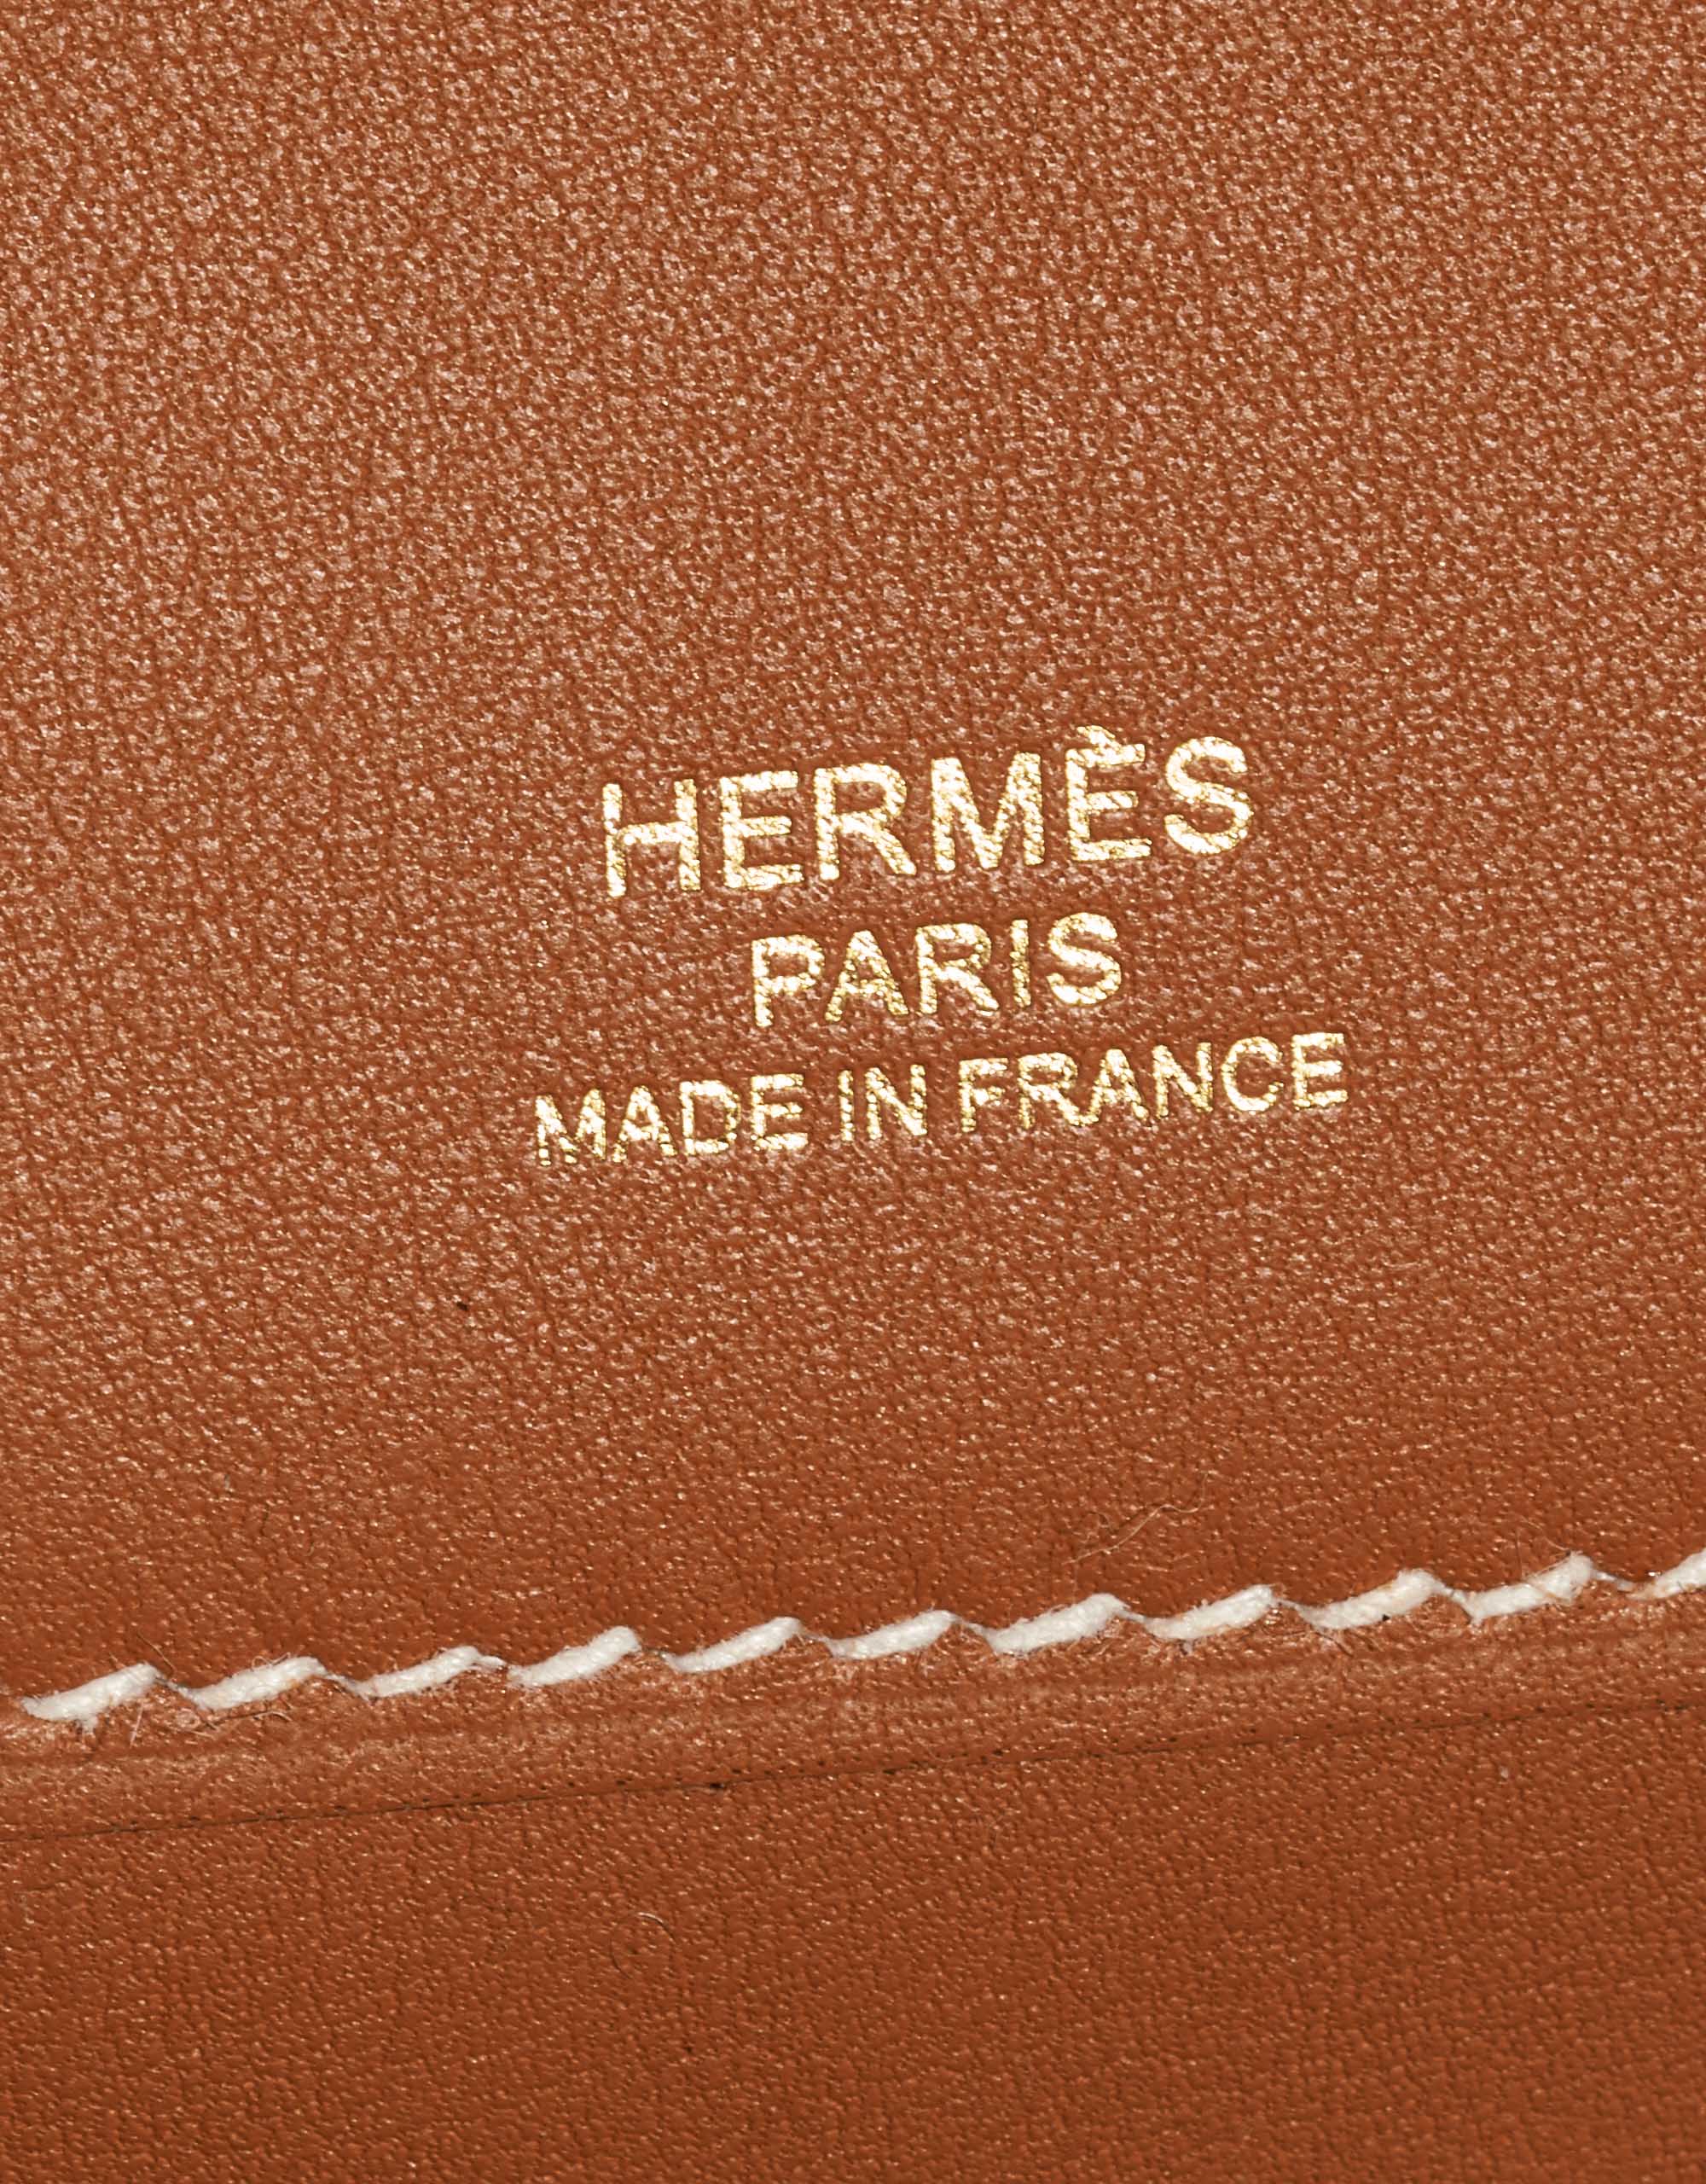 Hermès Hermès Kelly Cut Swift Leather Clutch Bag-Noir Gold Hardward (Clutch  Bags)